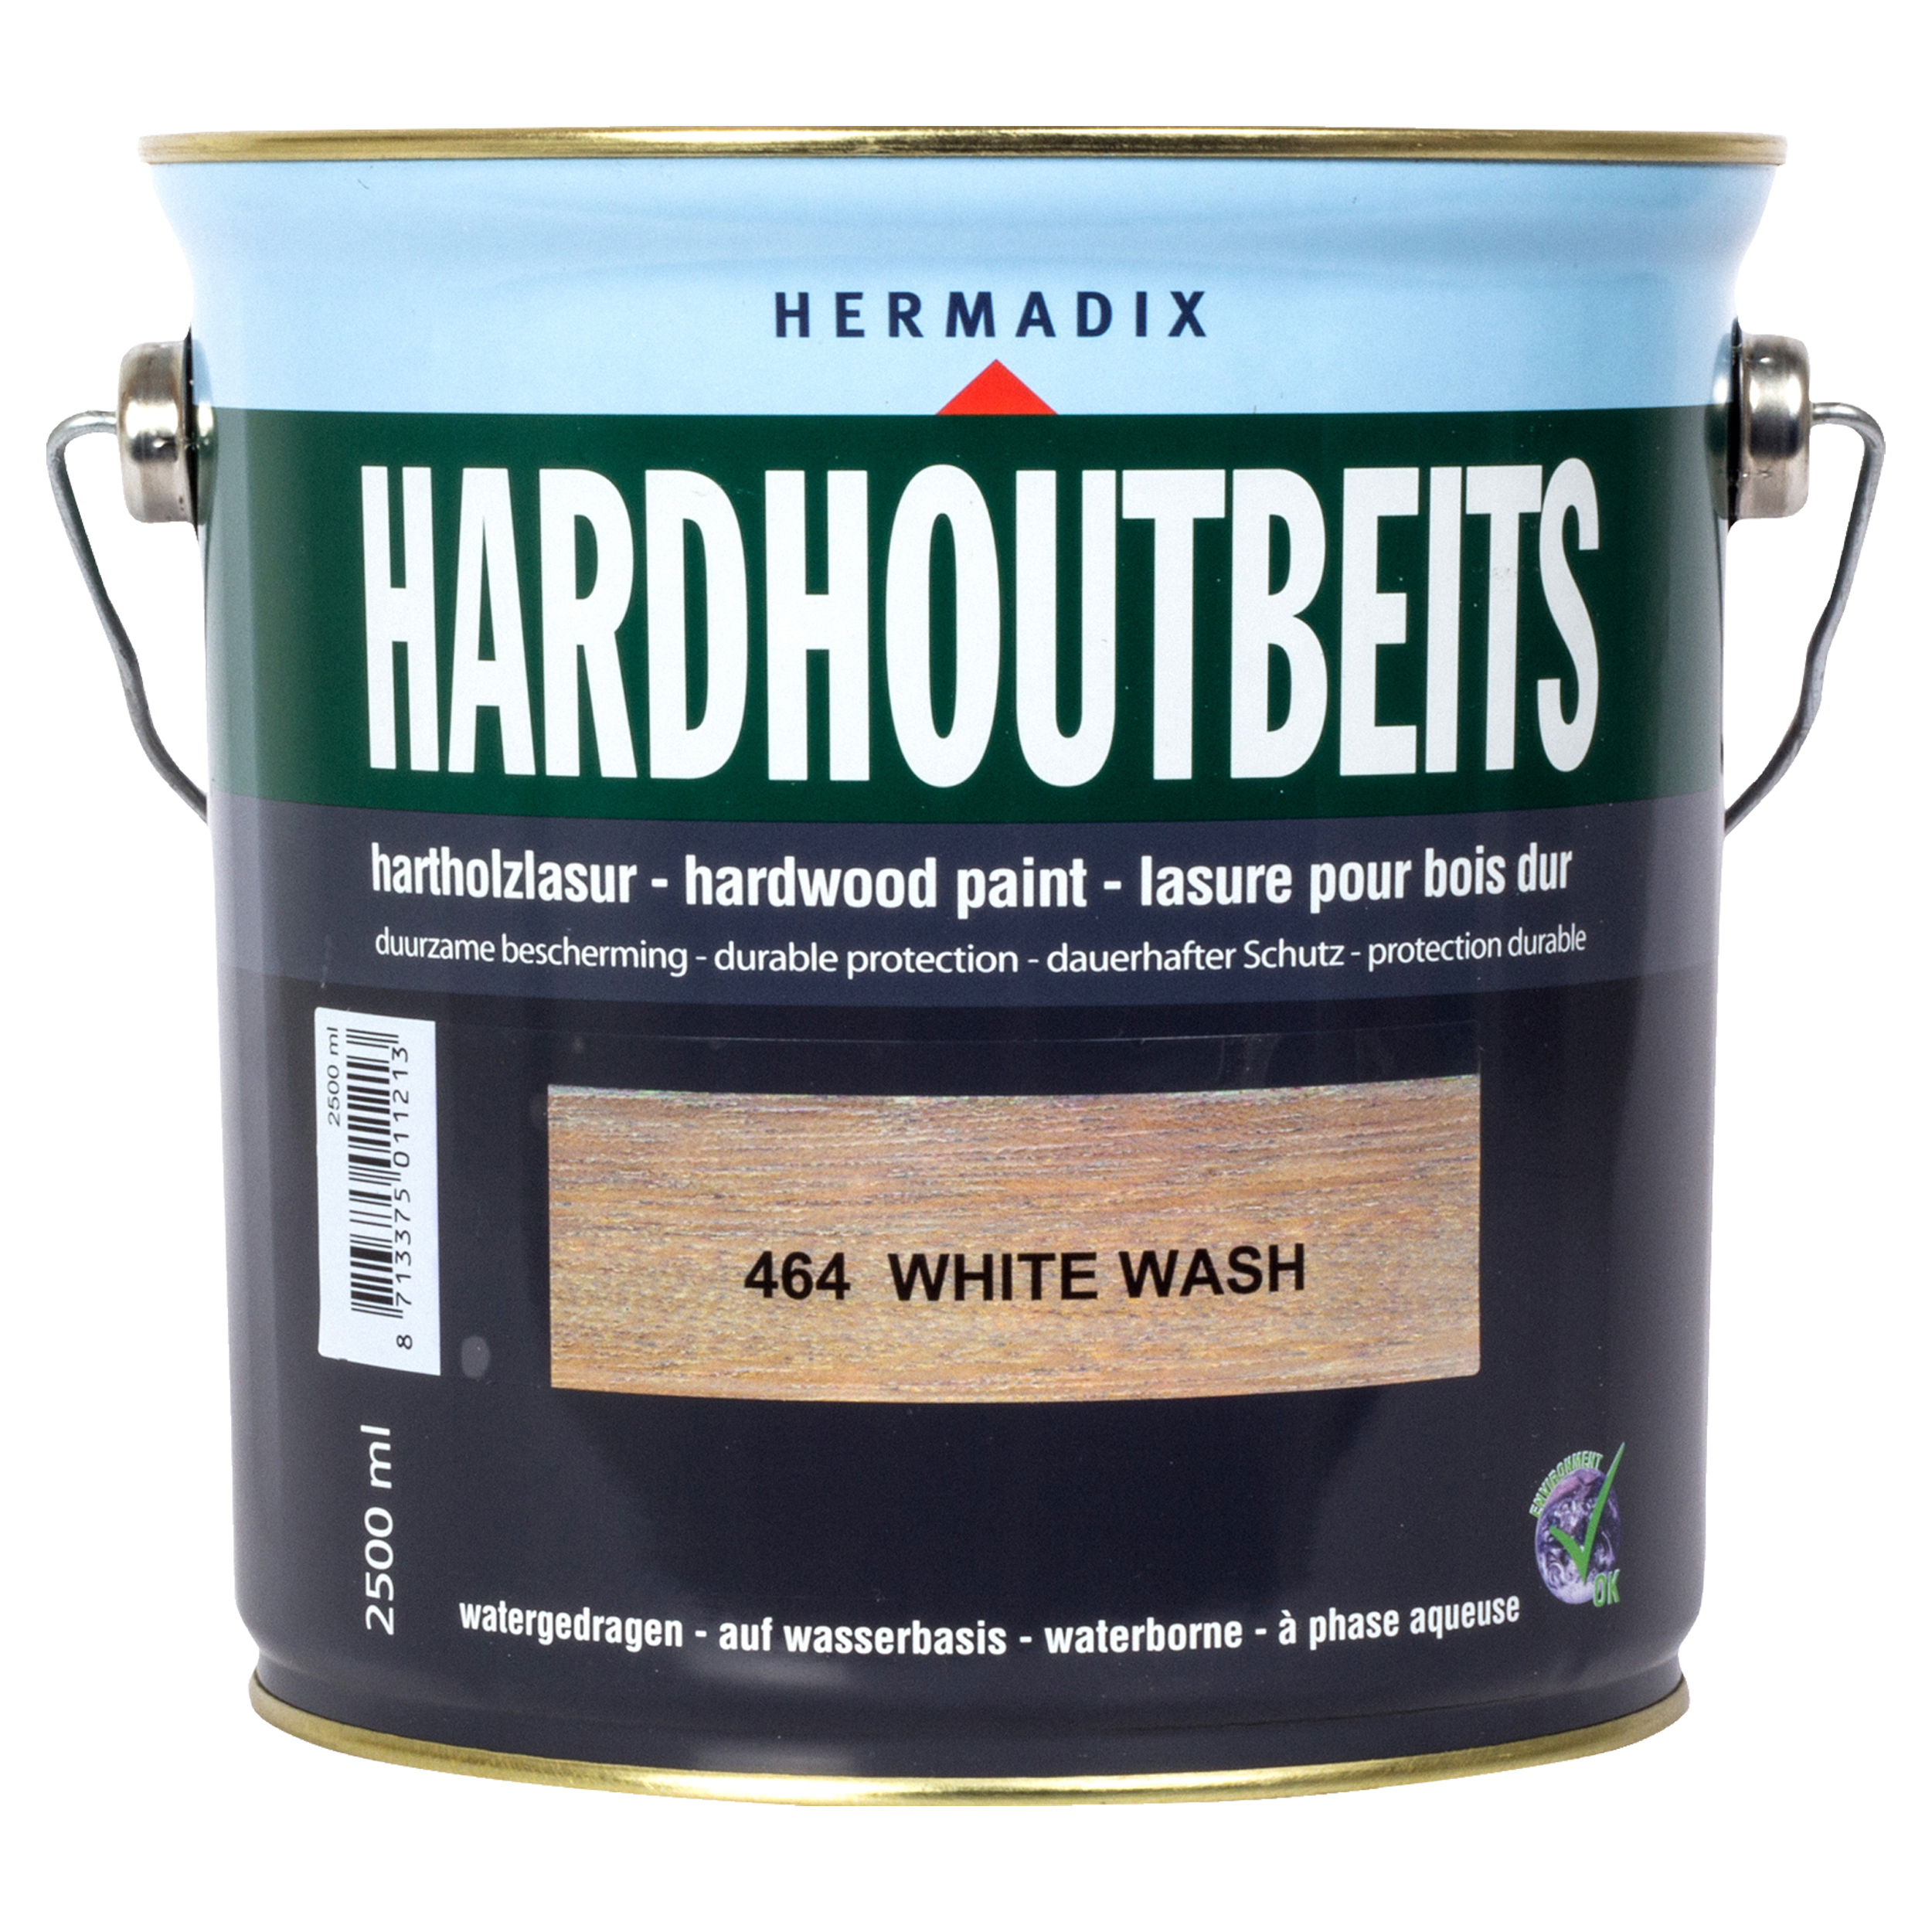 25.846.42 Hermadix  hardhoutbeits zijdeglans - 2500 ml - white wash 464)